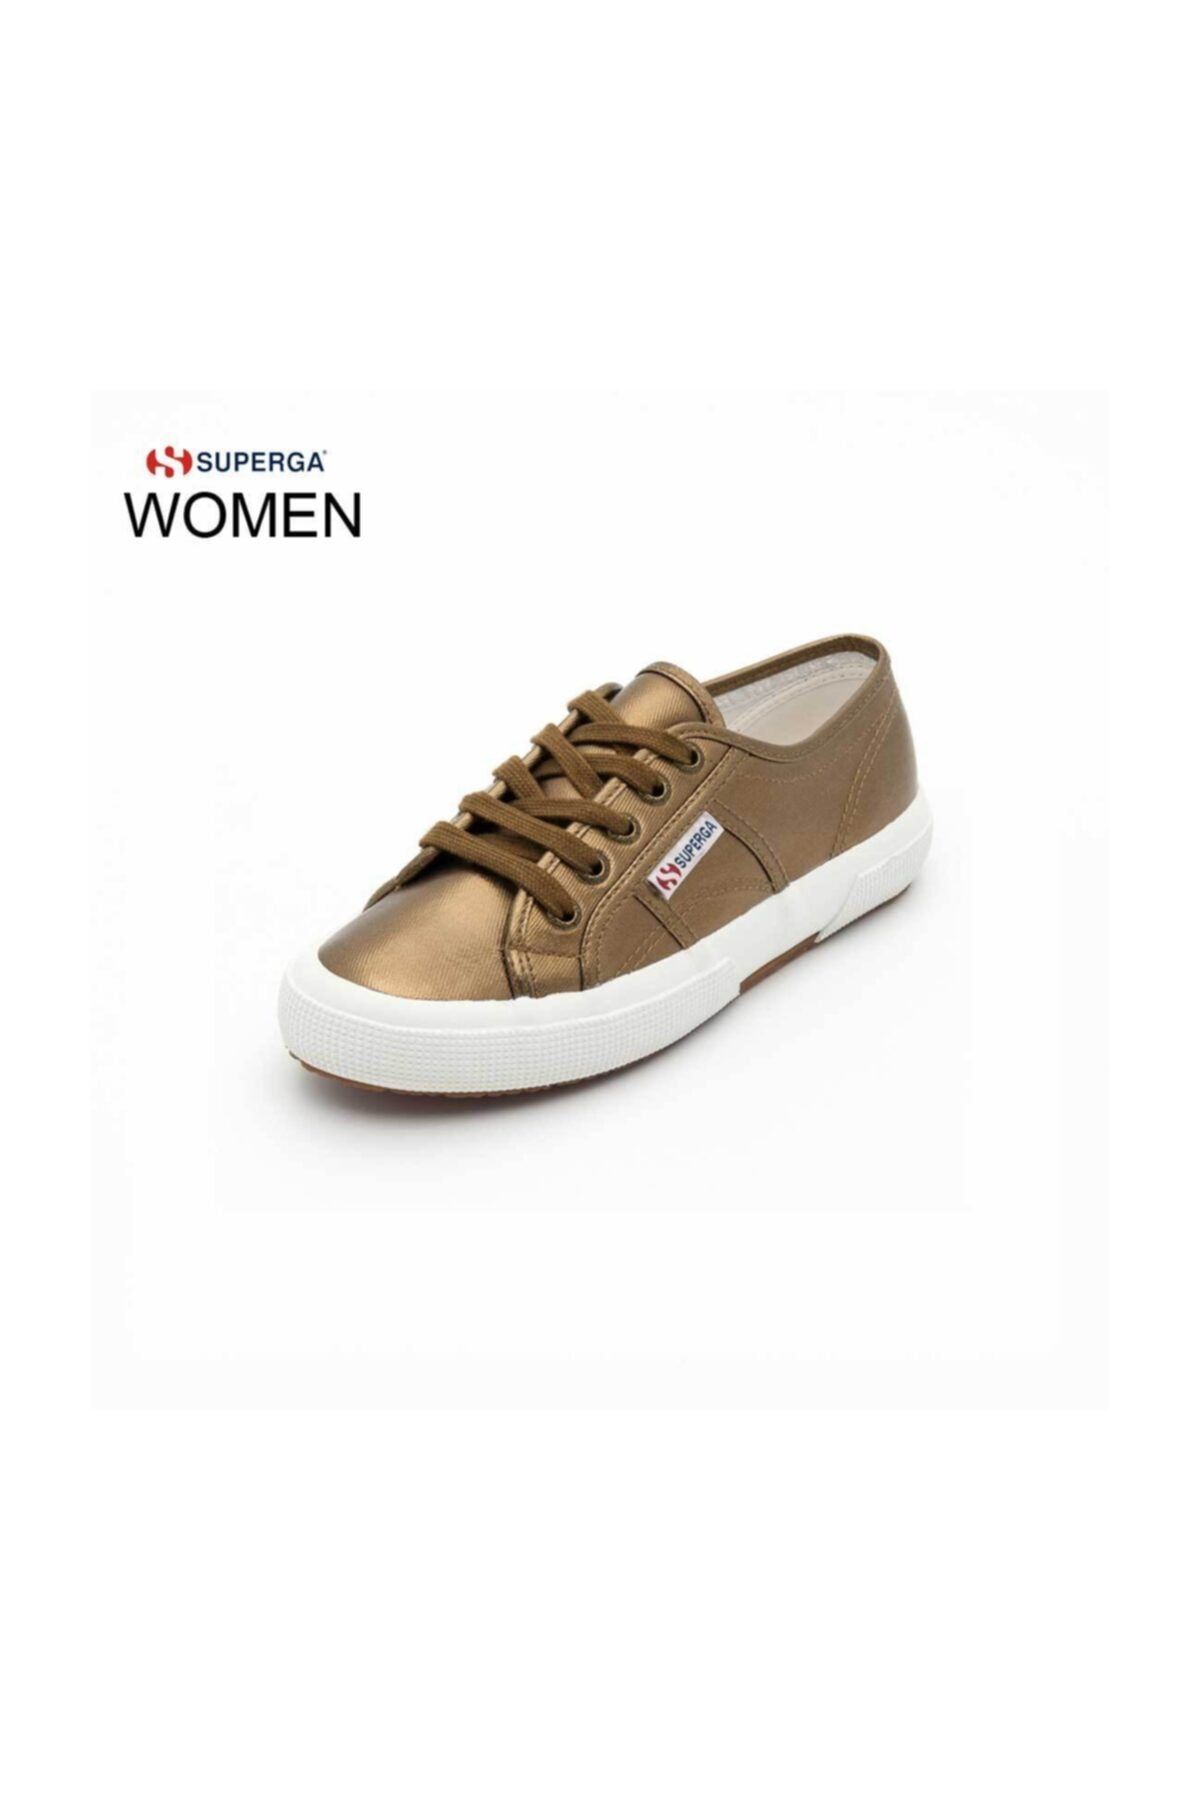 Superga 2750-COTMETU Bronz Kadın Sneaker 100155217